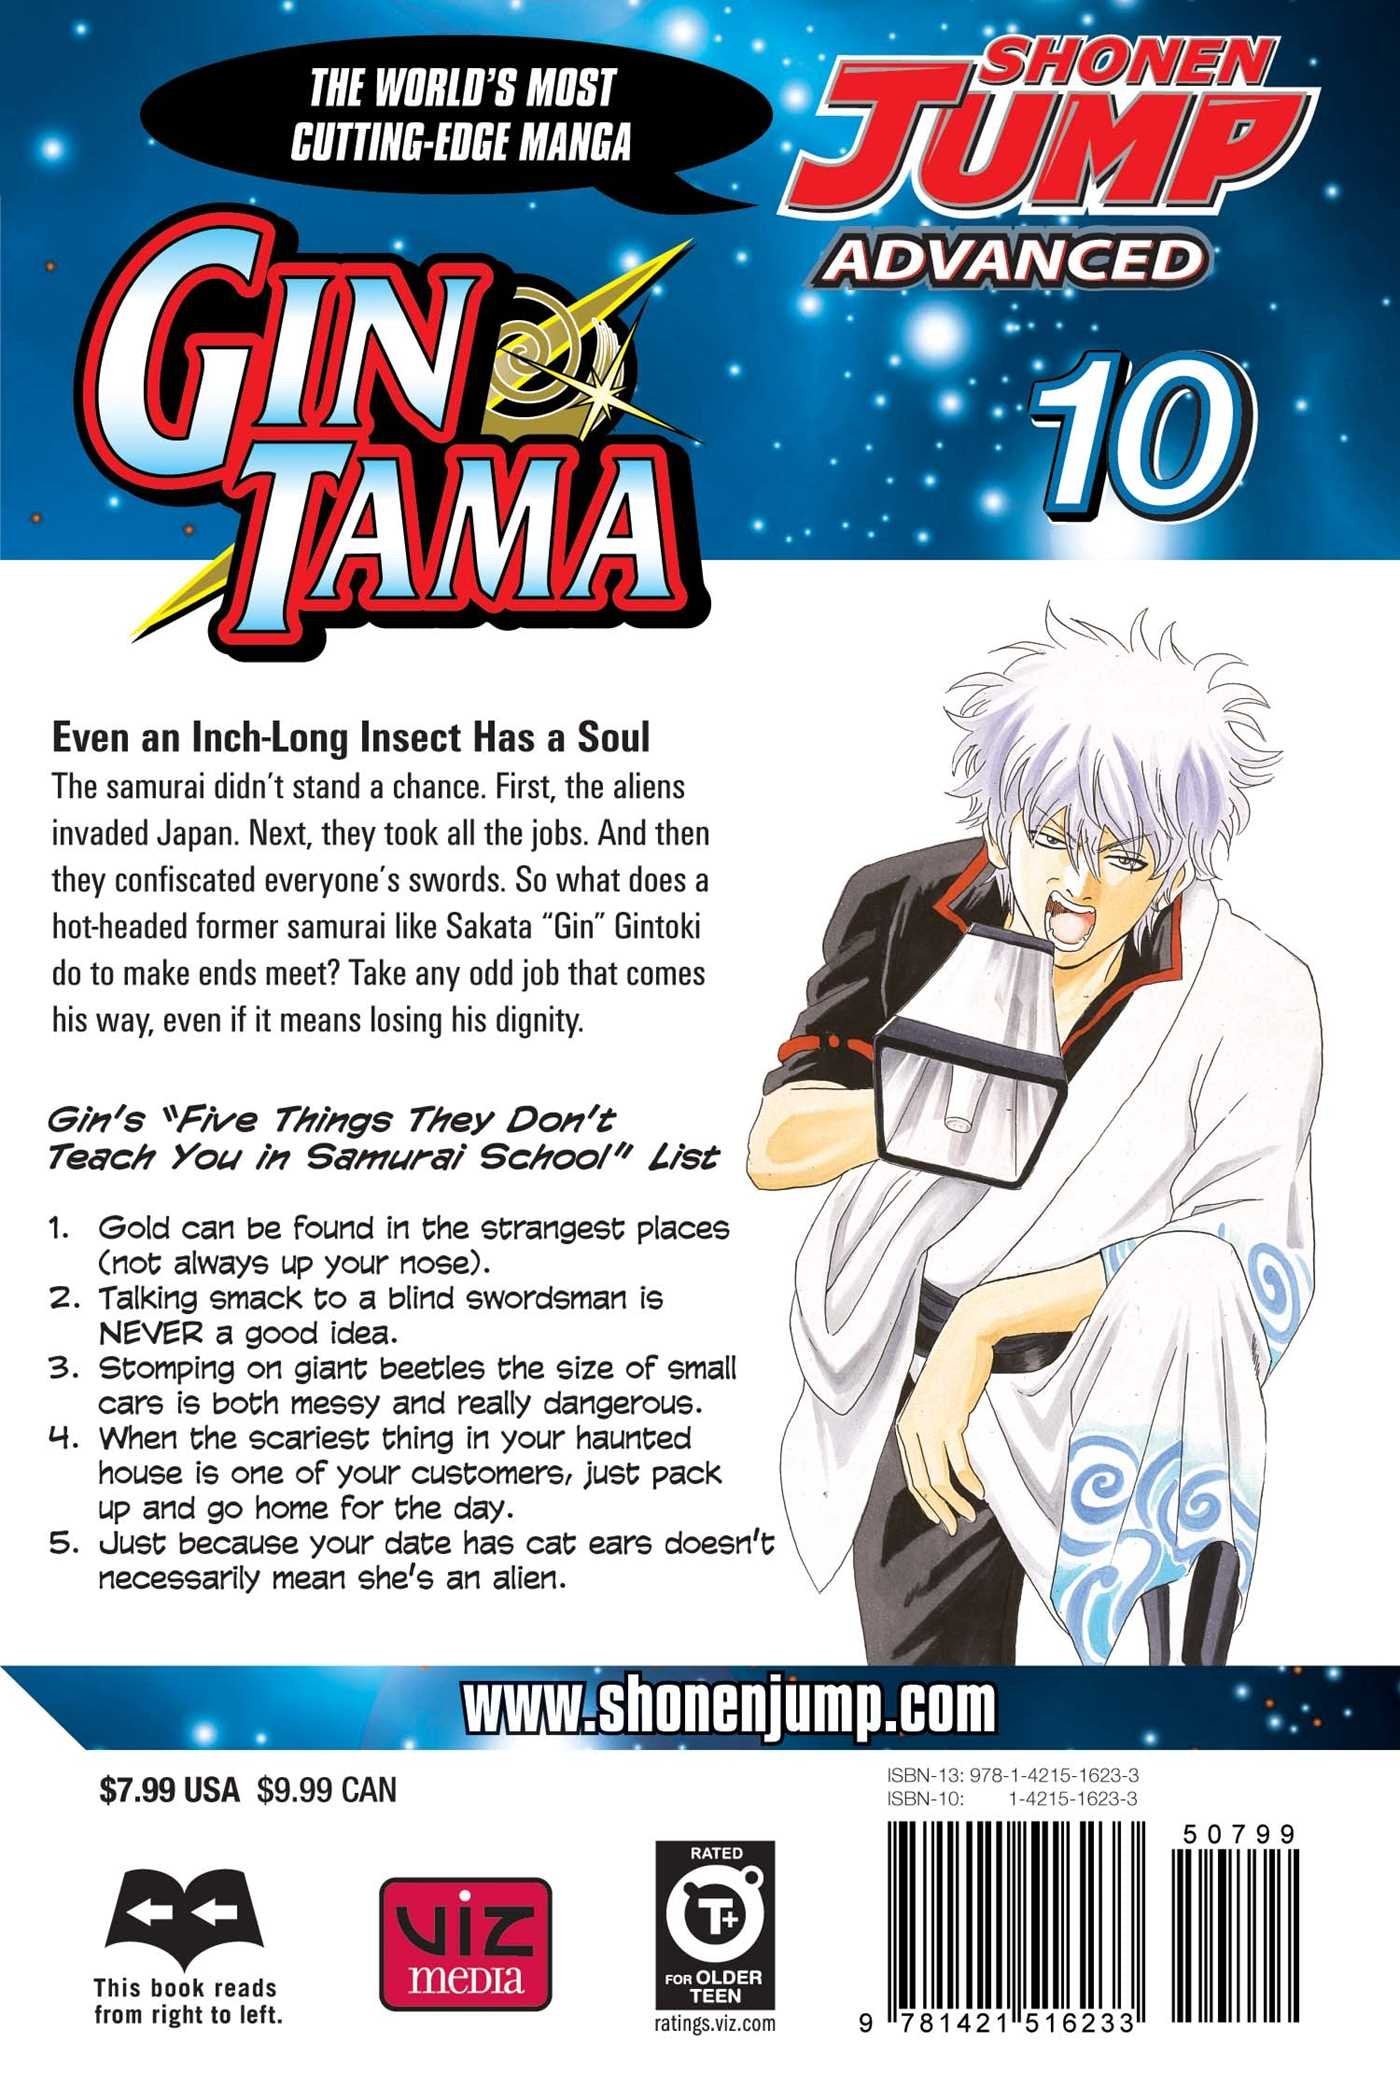 Gin Tama, Volume 10